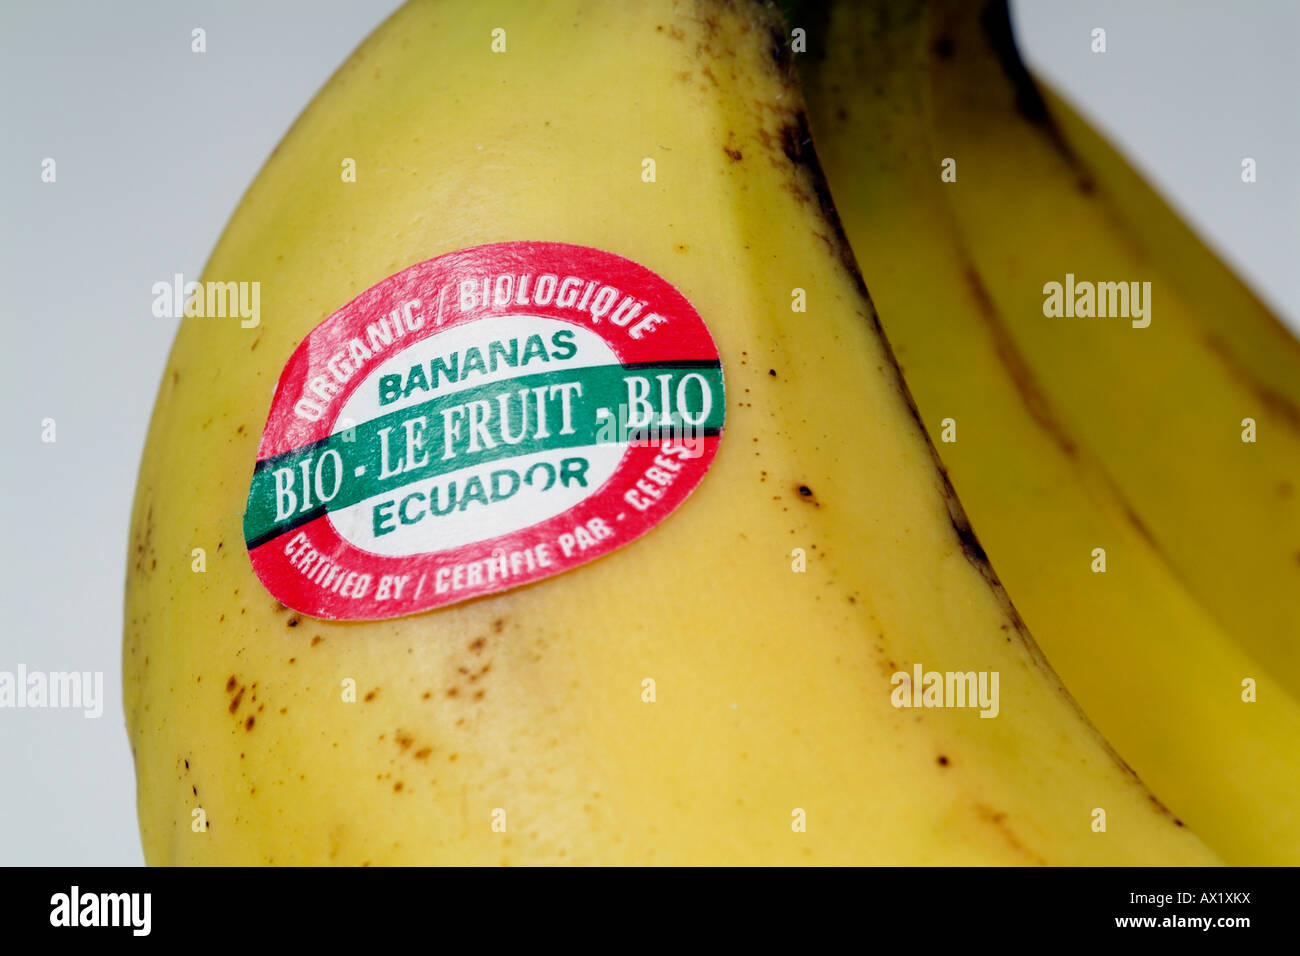 Banana with product sticker Fairtrade Banana Label Organic Bio Ecuador  Certification Stock Photo - Alamy